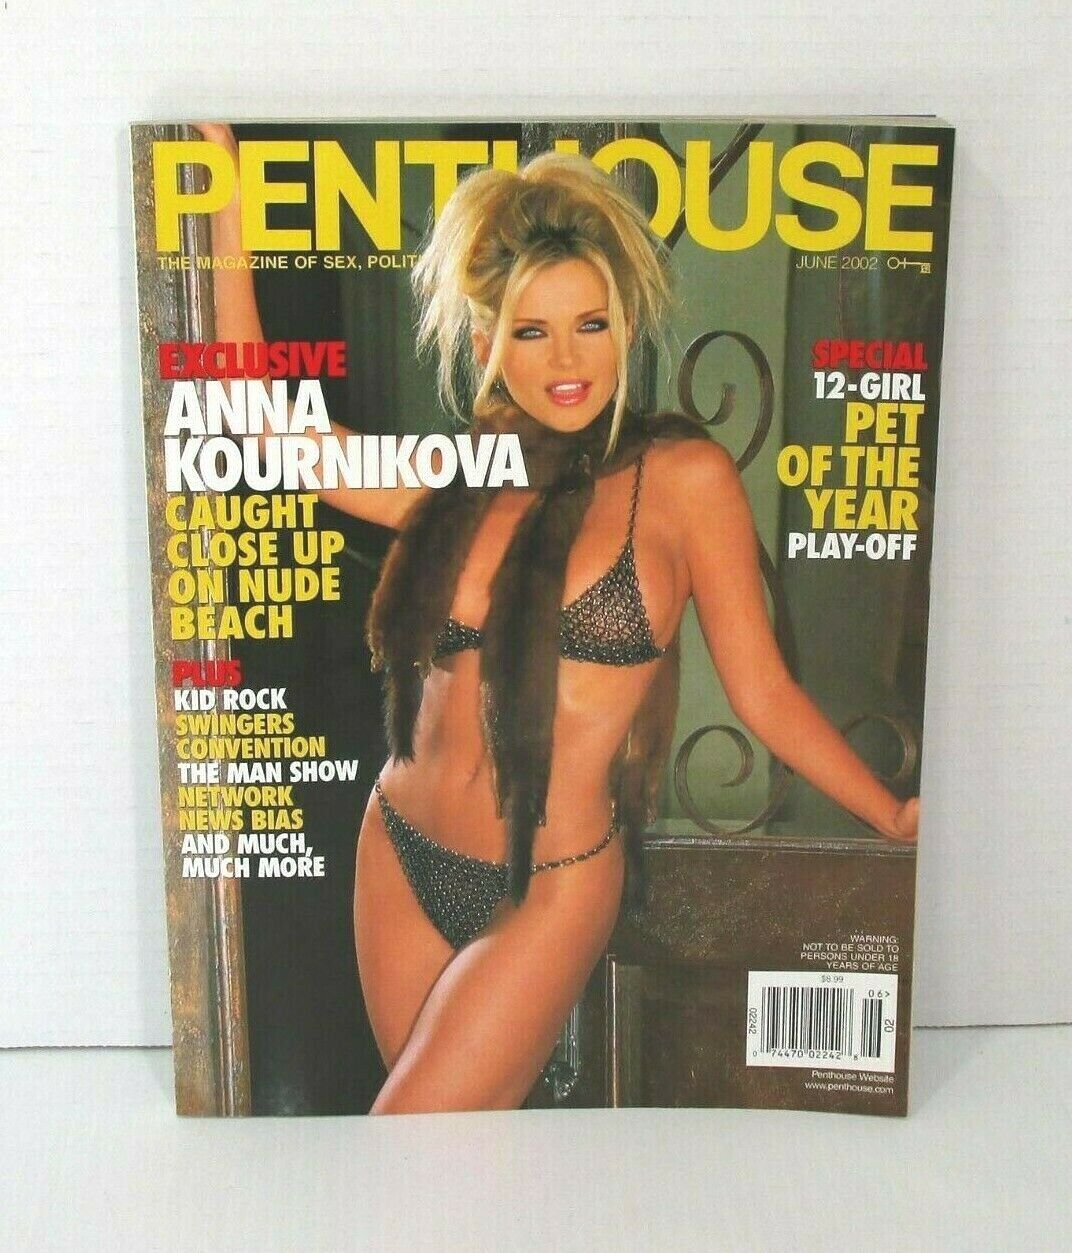  PENTHOUSE Magazine June 2002 Edition Anna KourniKova - Victoria Zdrok 